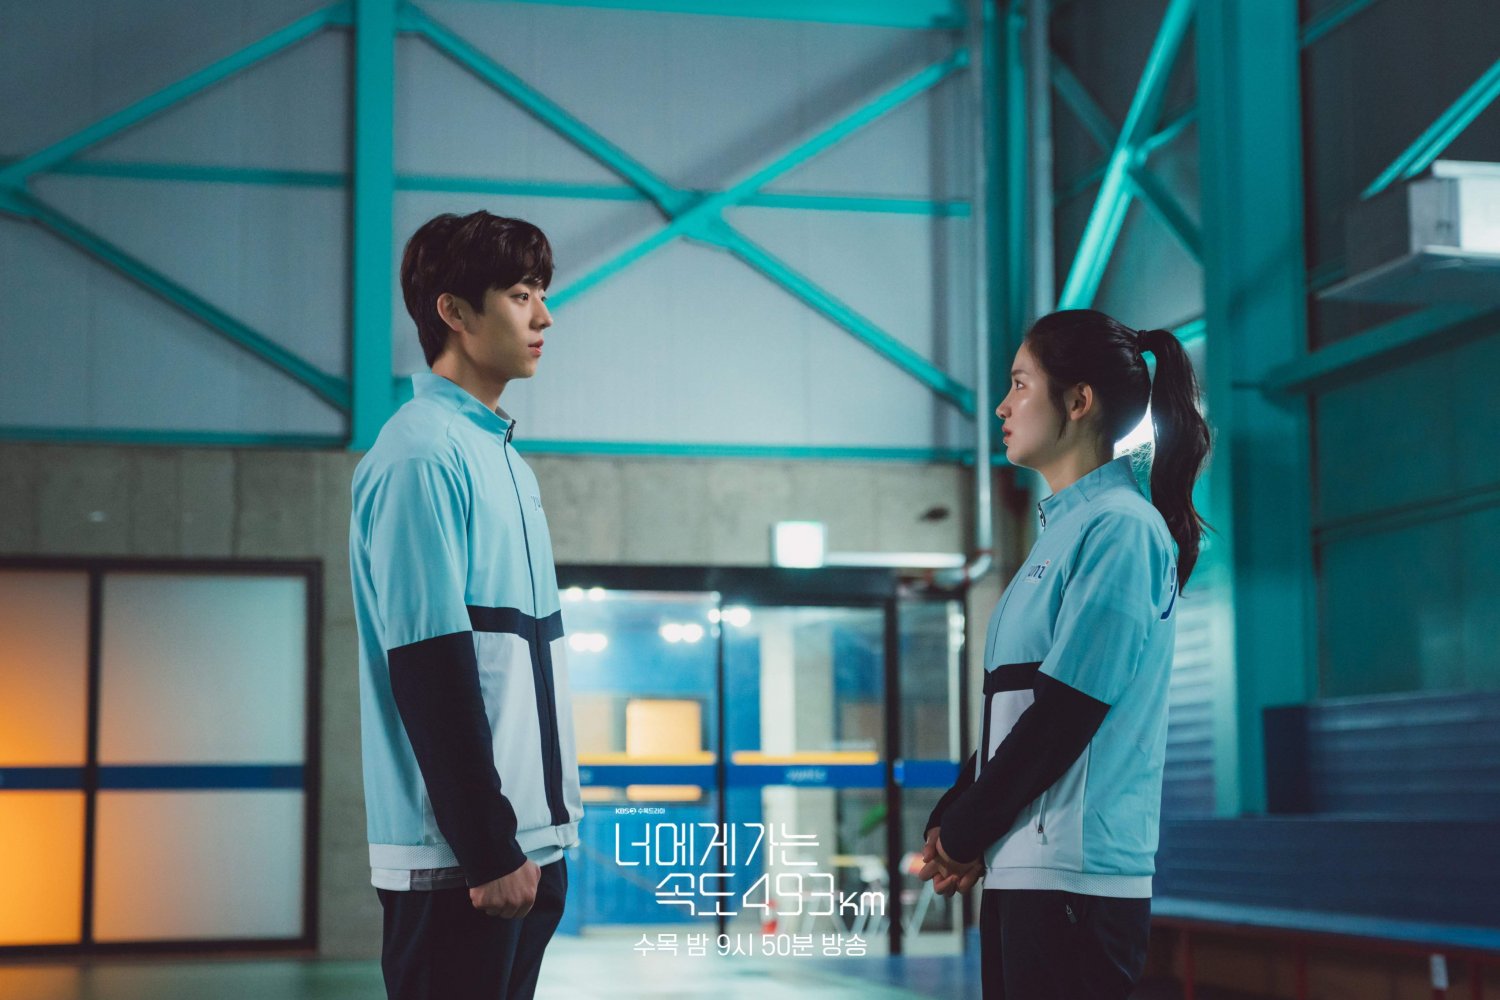 Photos] New Stills Added for the Korean Drama 'Love All Play' @ HanCinema